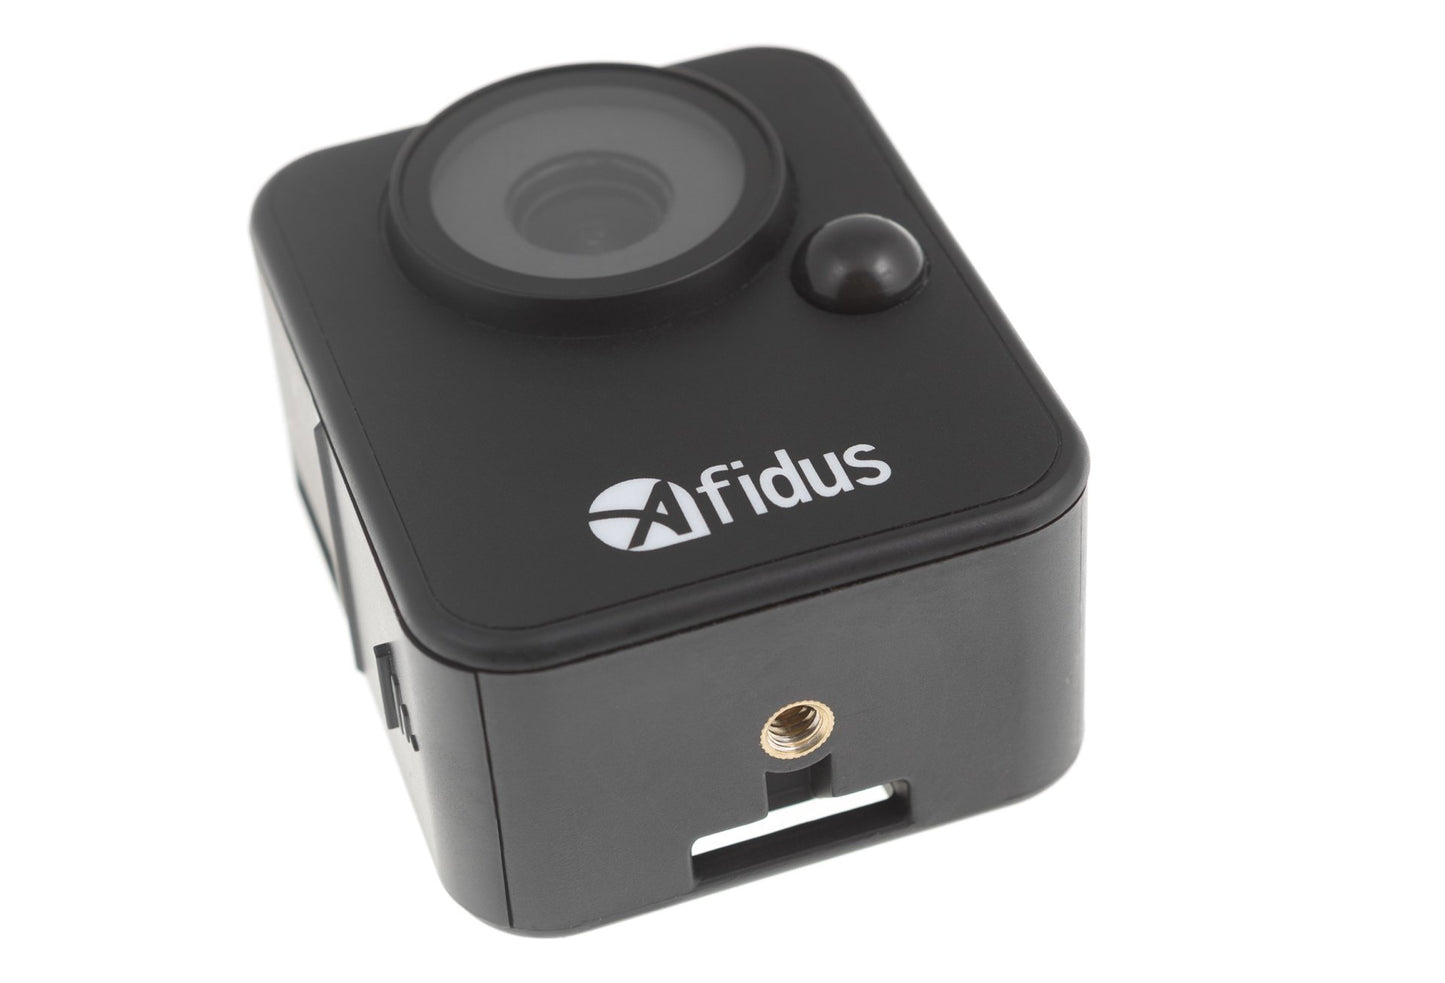 Afidus ATL-200S 1080P Timelapse Camera